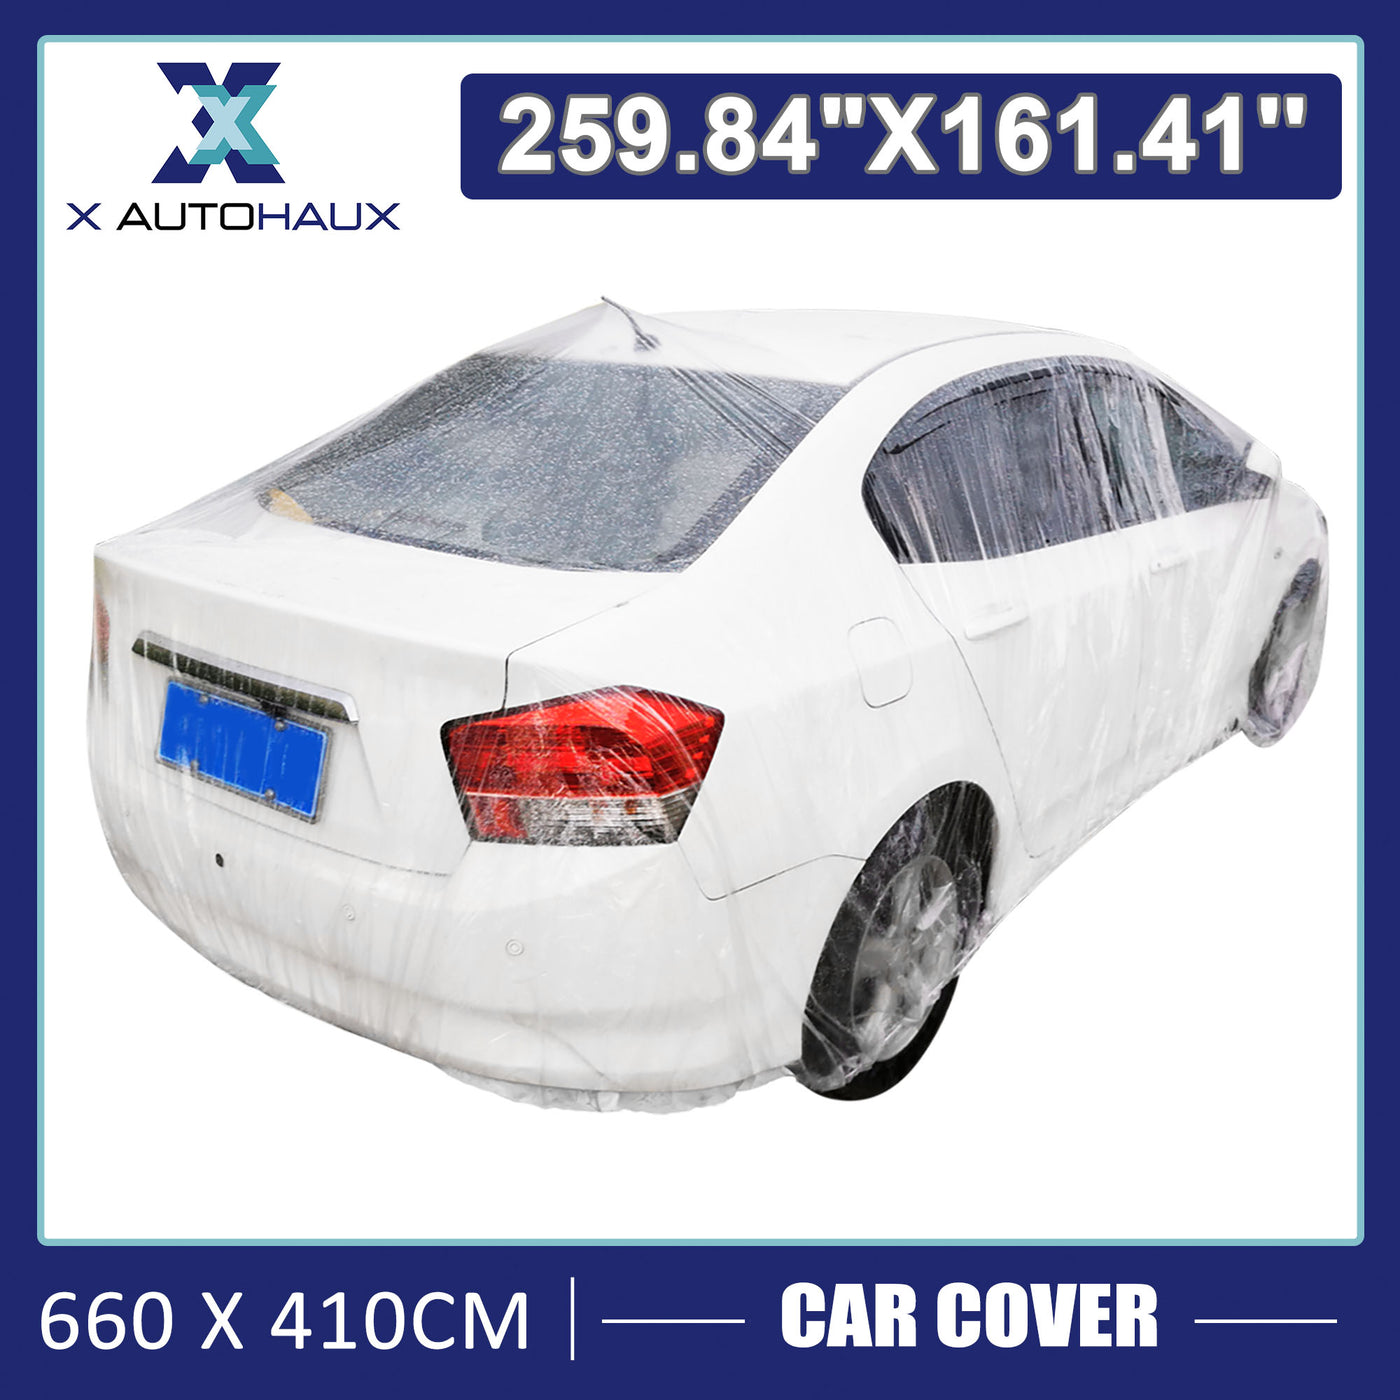 X AUTOHAUX Plastic Car Cover Shield Rain Snow Hail Dust Universal for Car SUV